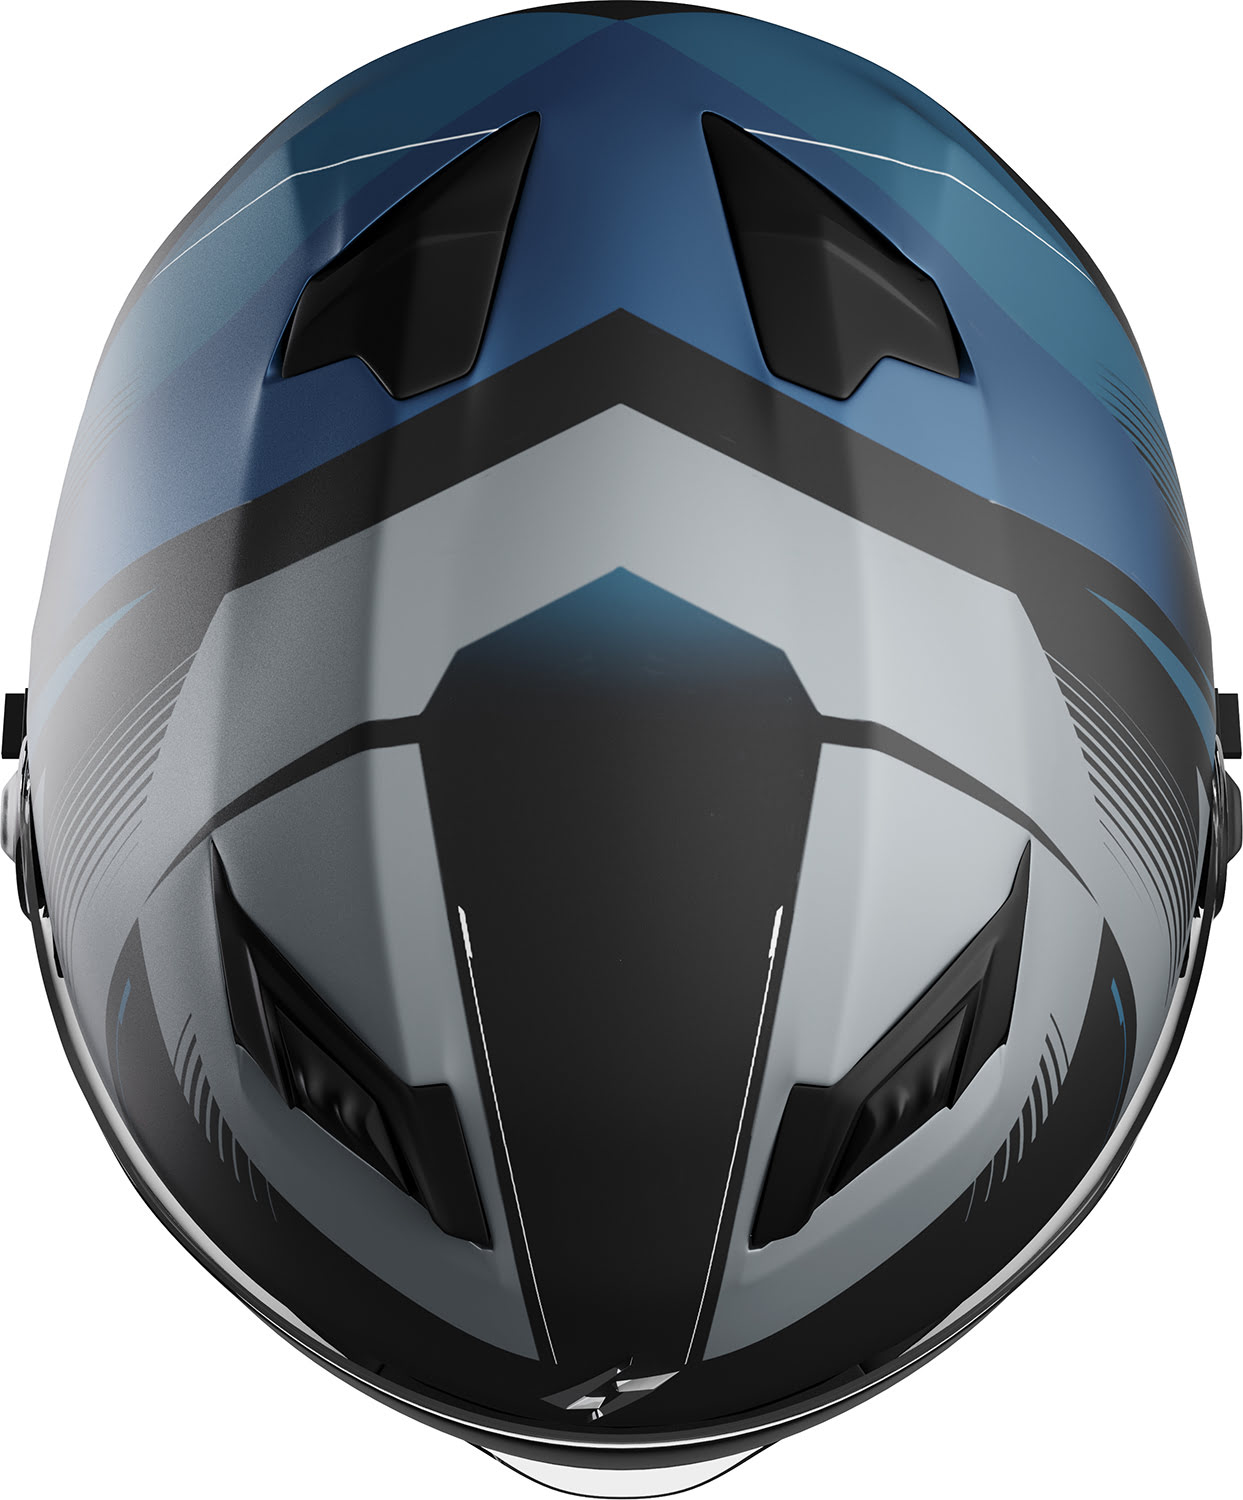 Helmet PUSHER RUSH Blue Metal Matt STORMER 